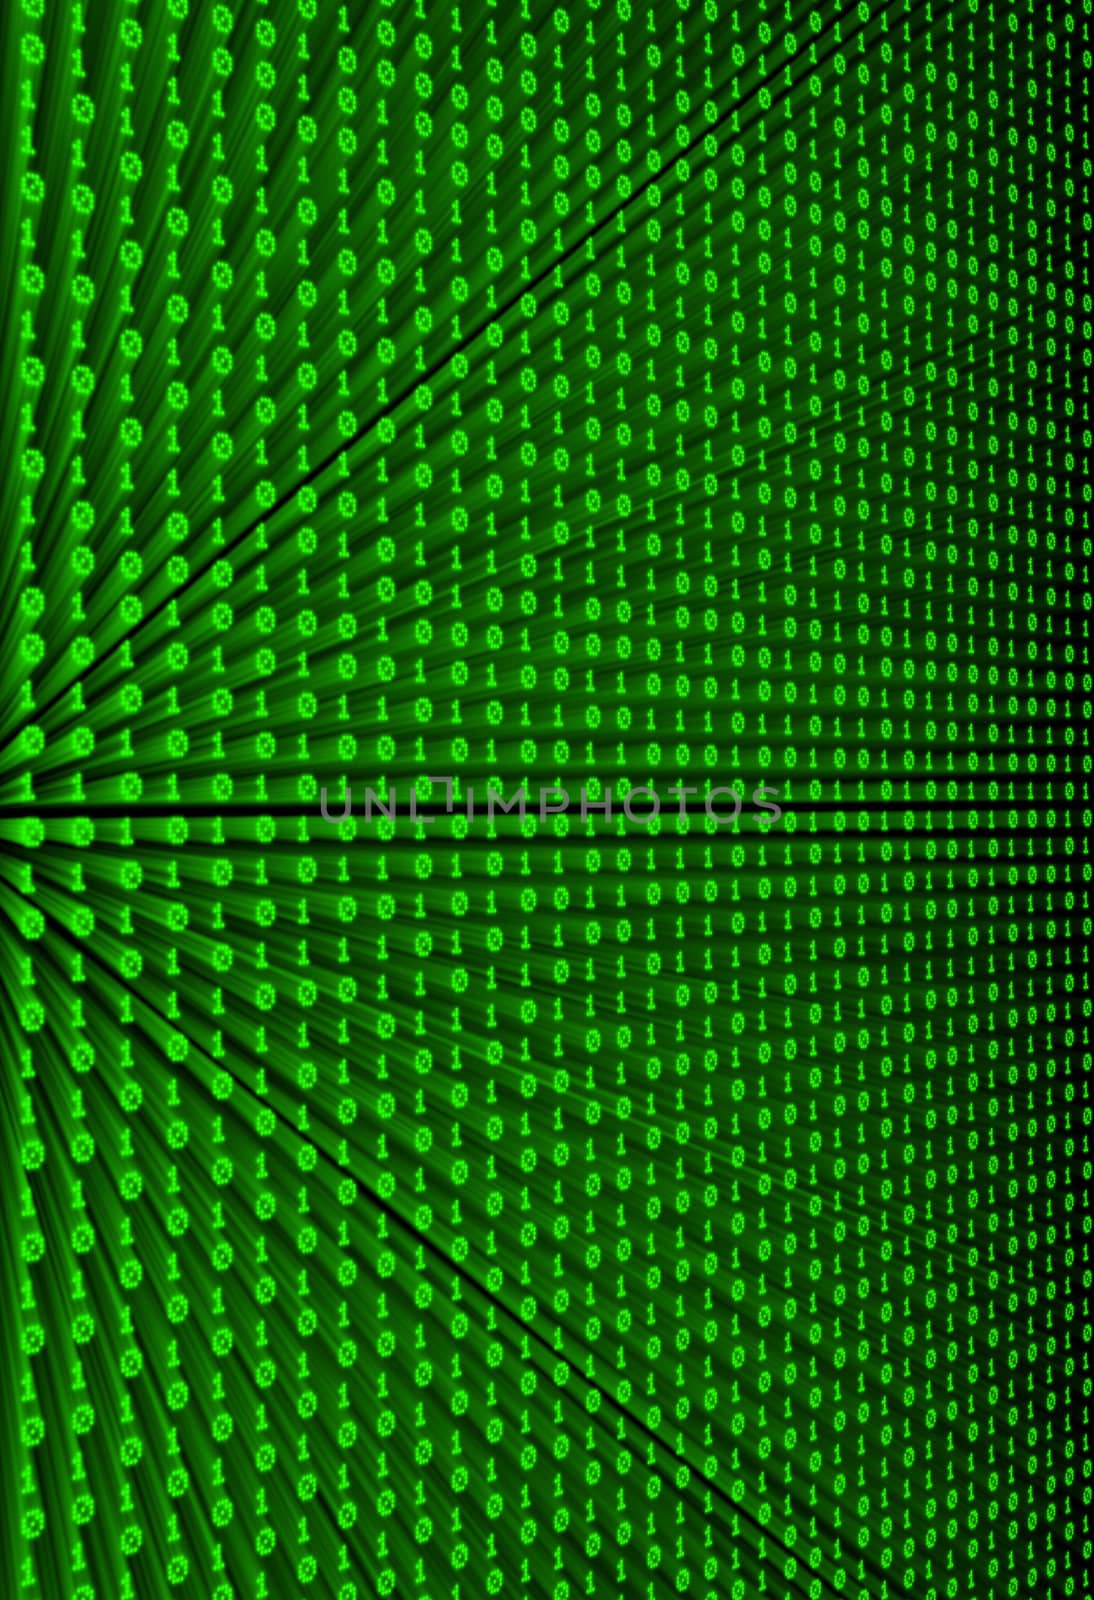 Digital background. A binary code in movement - a board